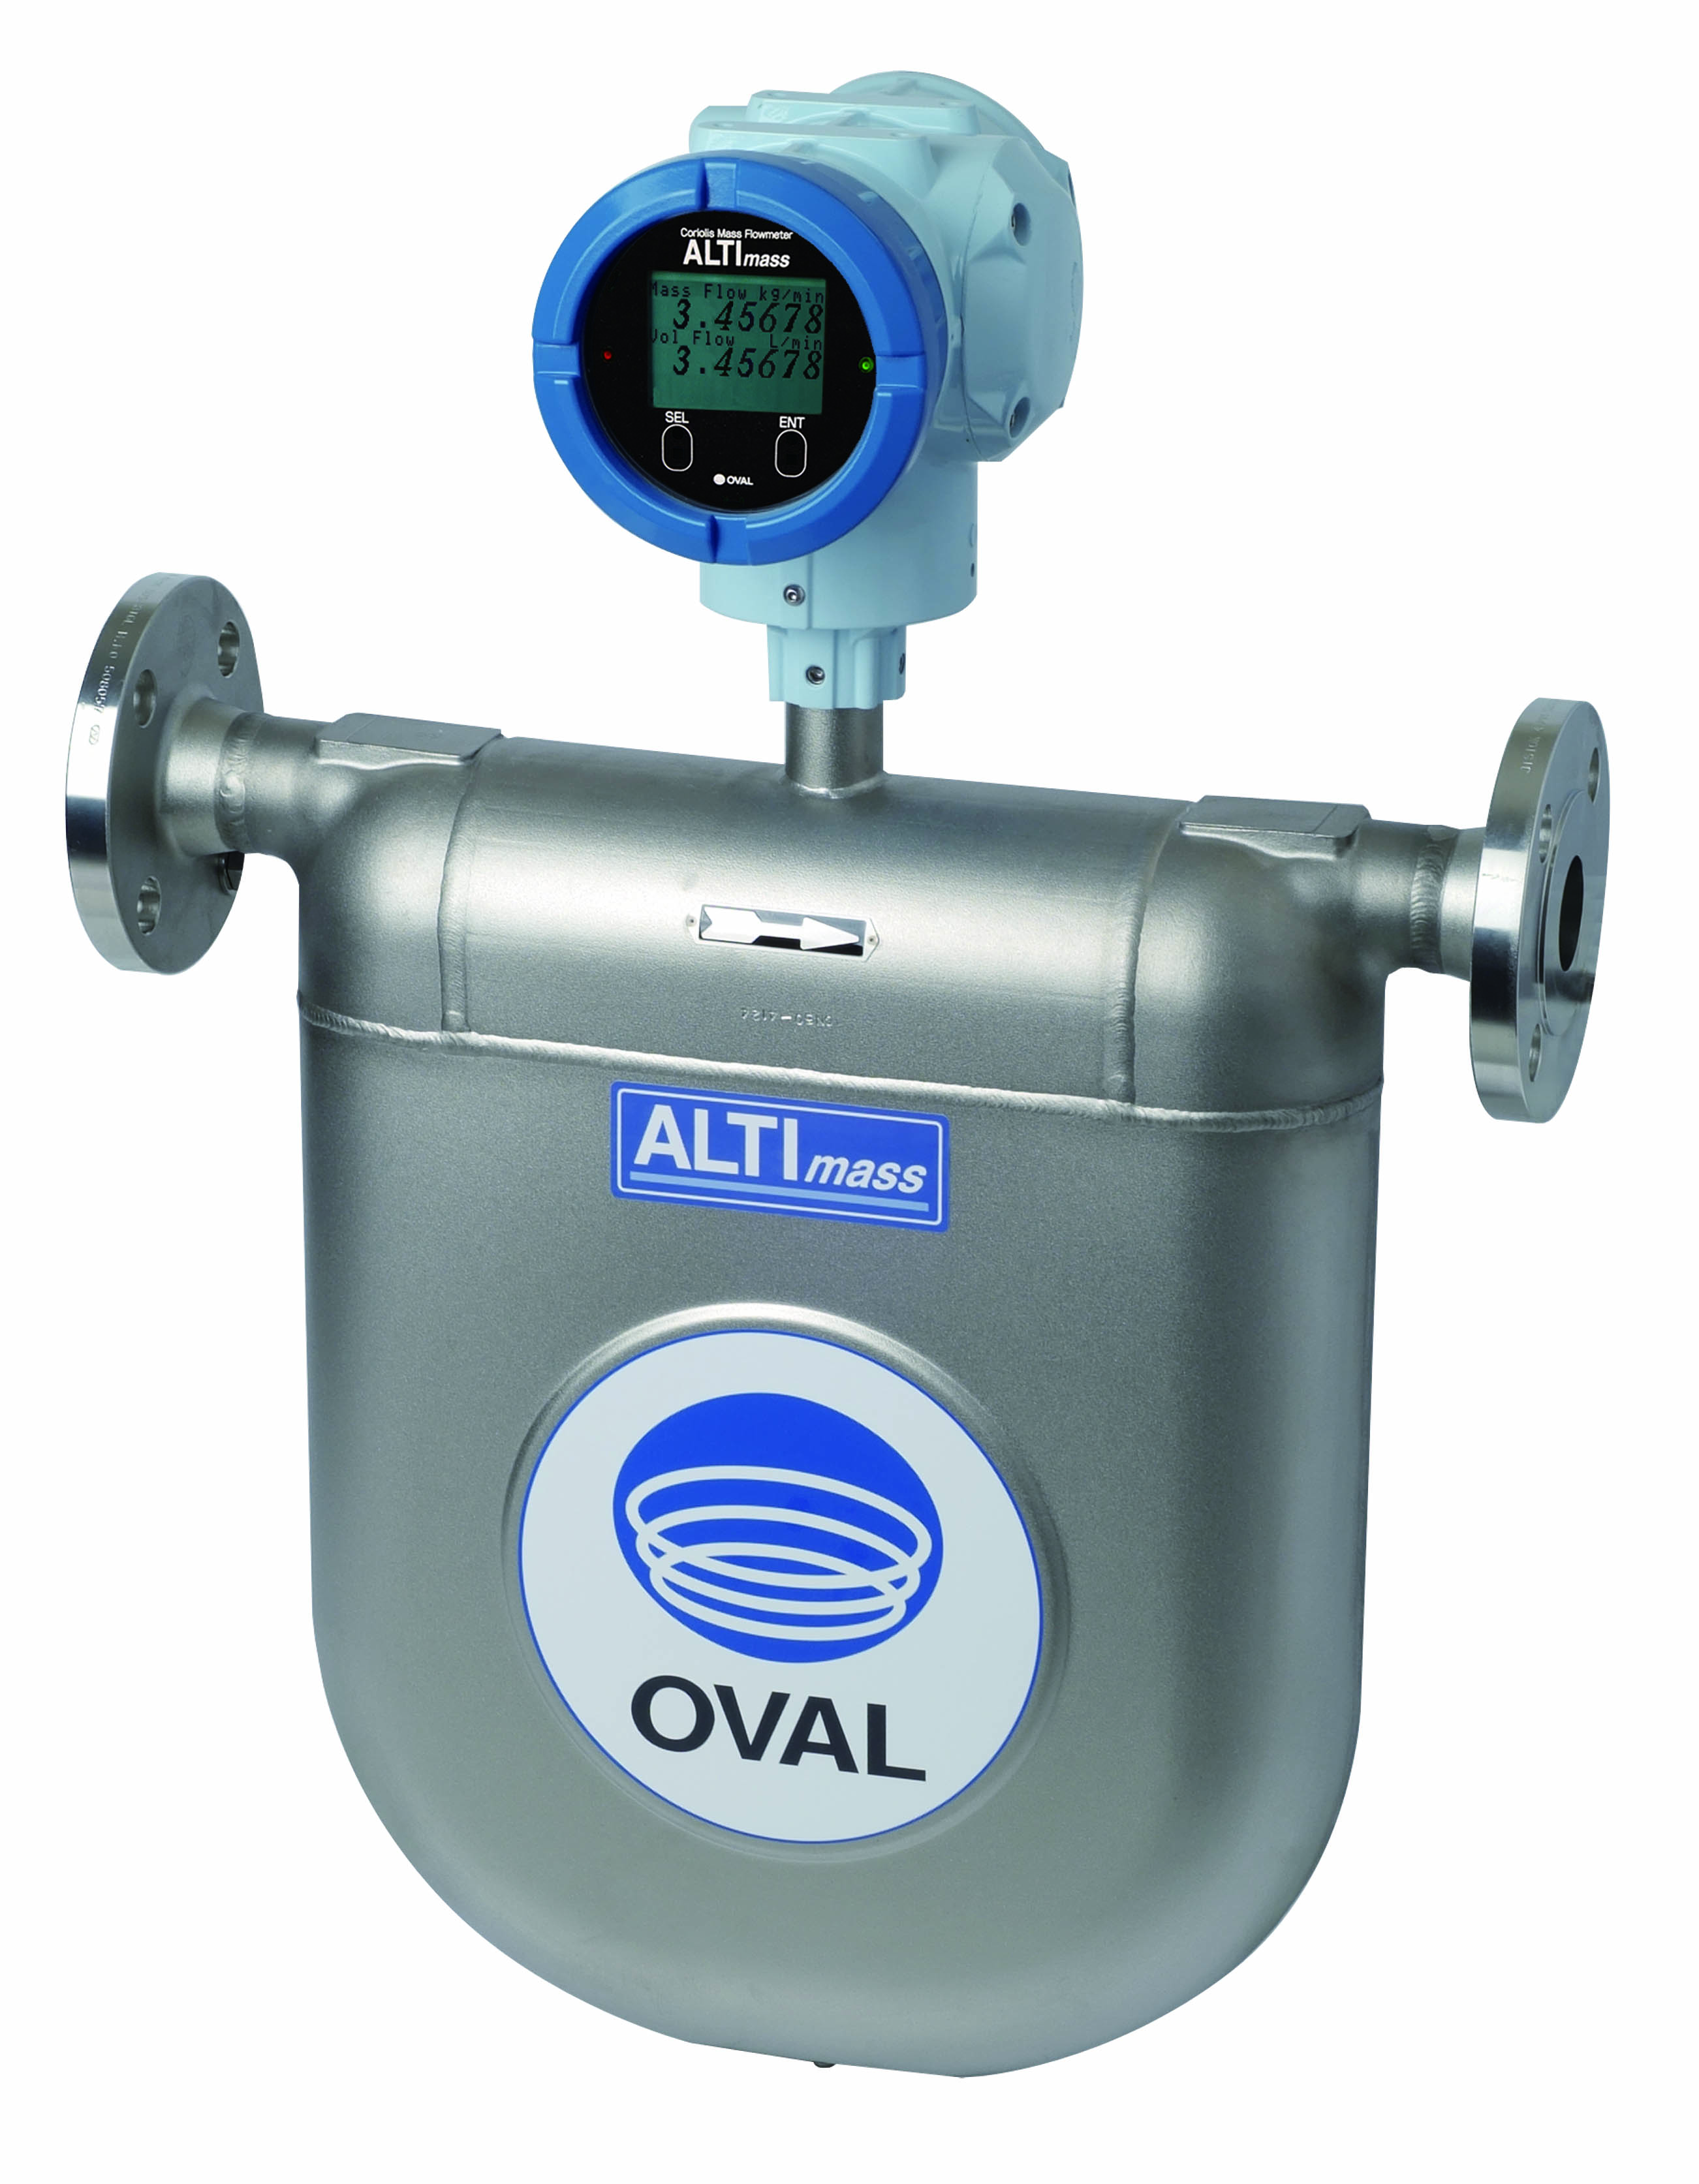 Coriolis Flowmeter ALTImass Type U is available at Industrie Automation Graz, IAG, throughout Austria. 